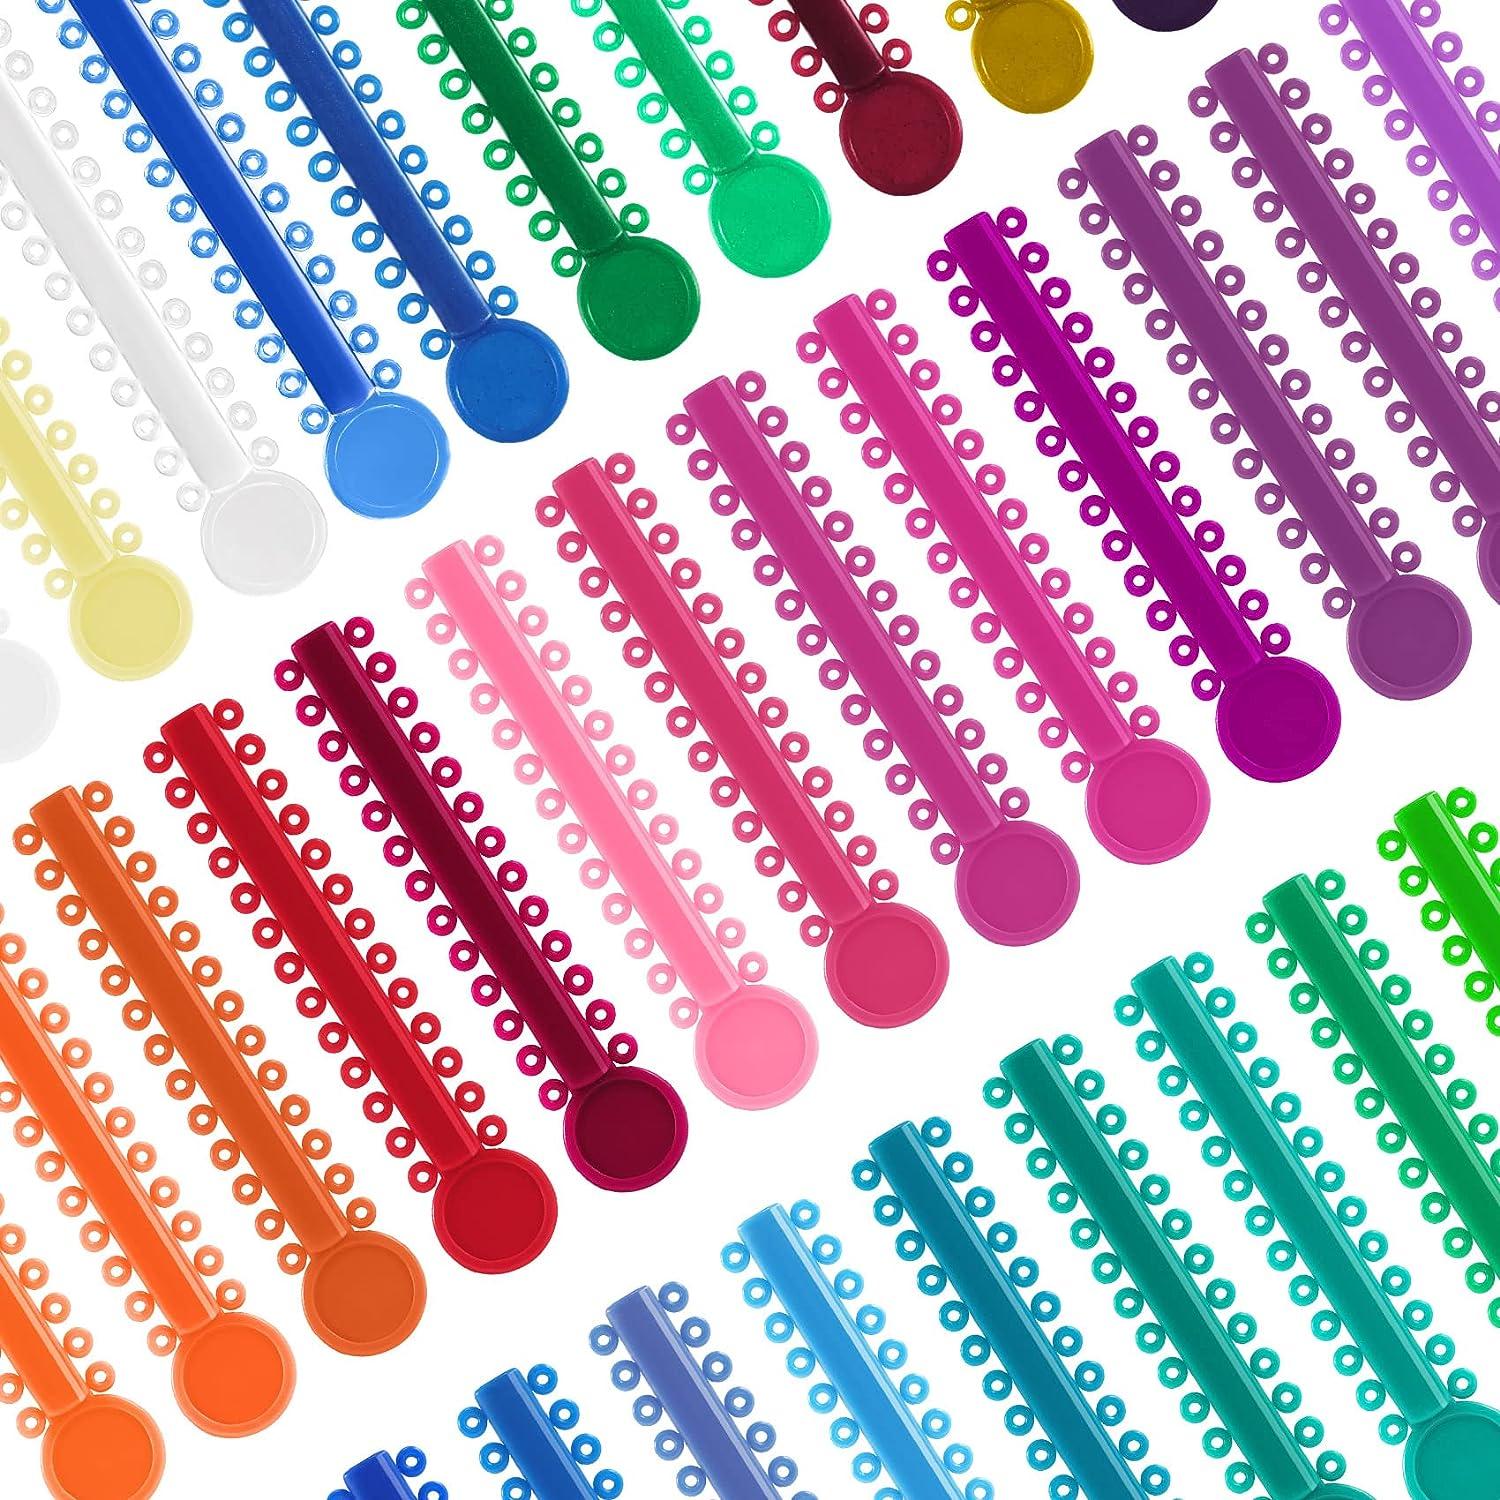 Fun Rubber Band Colors For Braces - PDOC